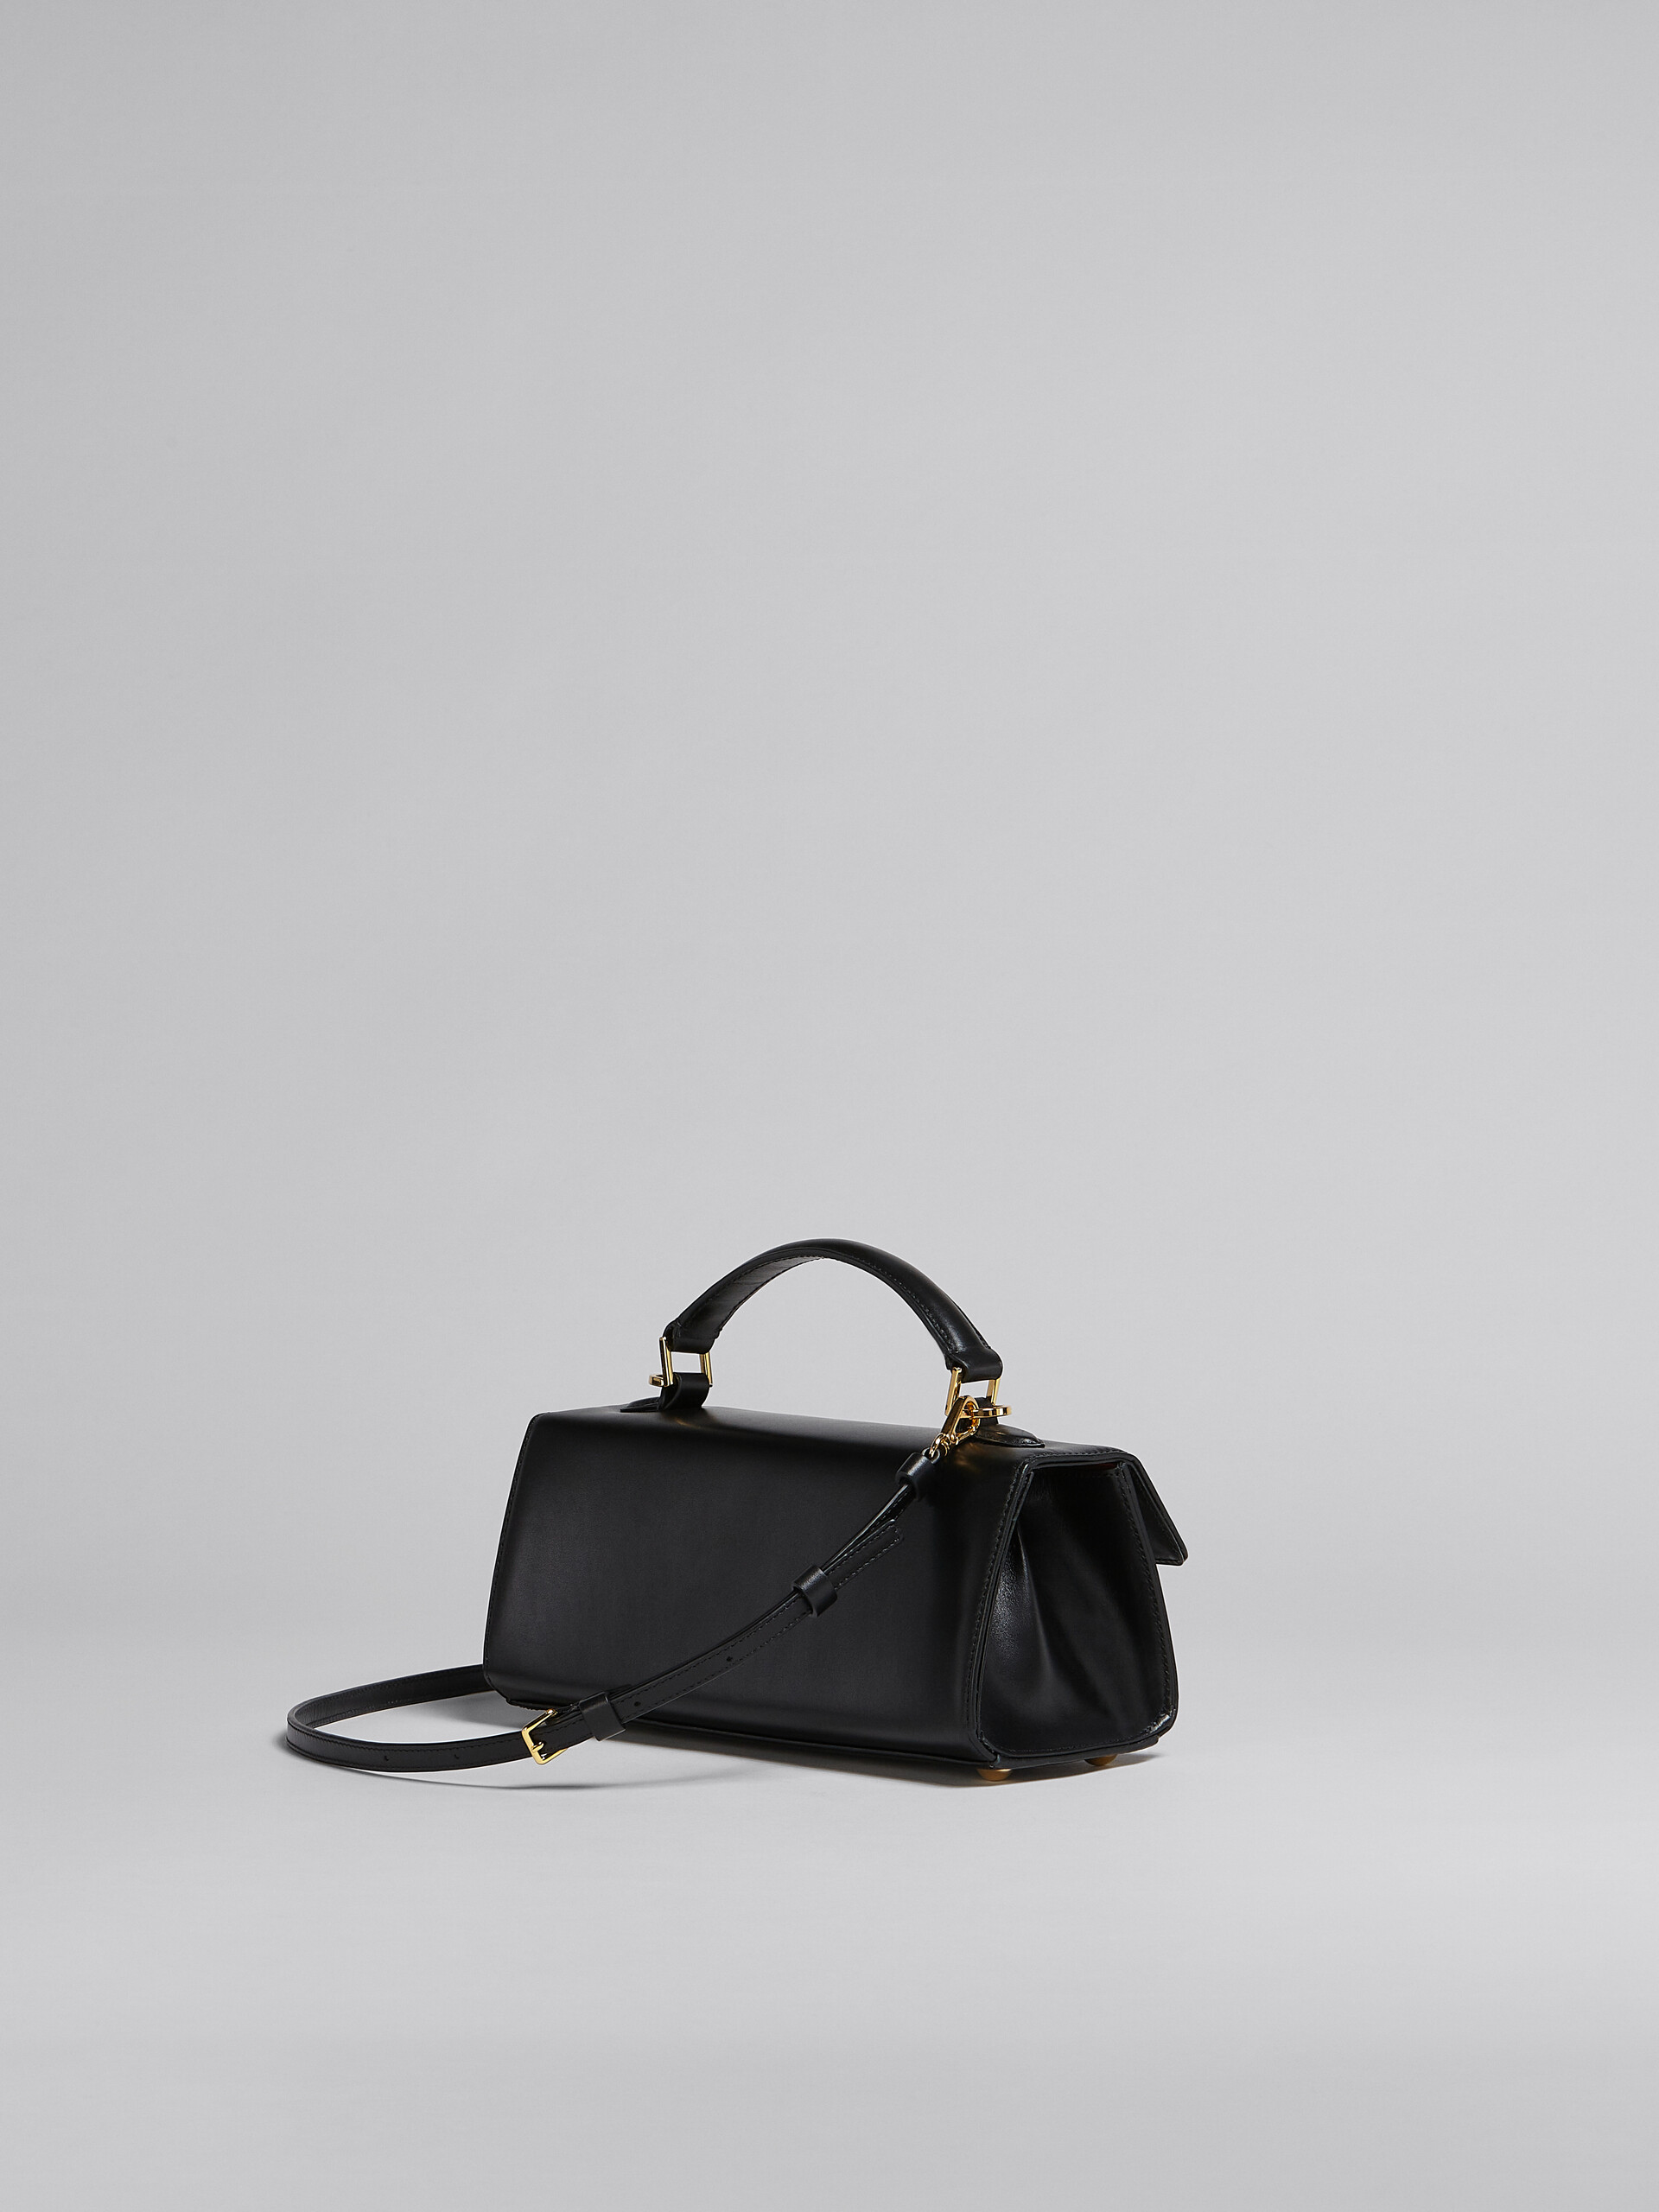 Relativity Medium Bag in black leather - Handbag - Image 3